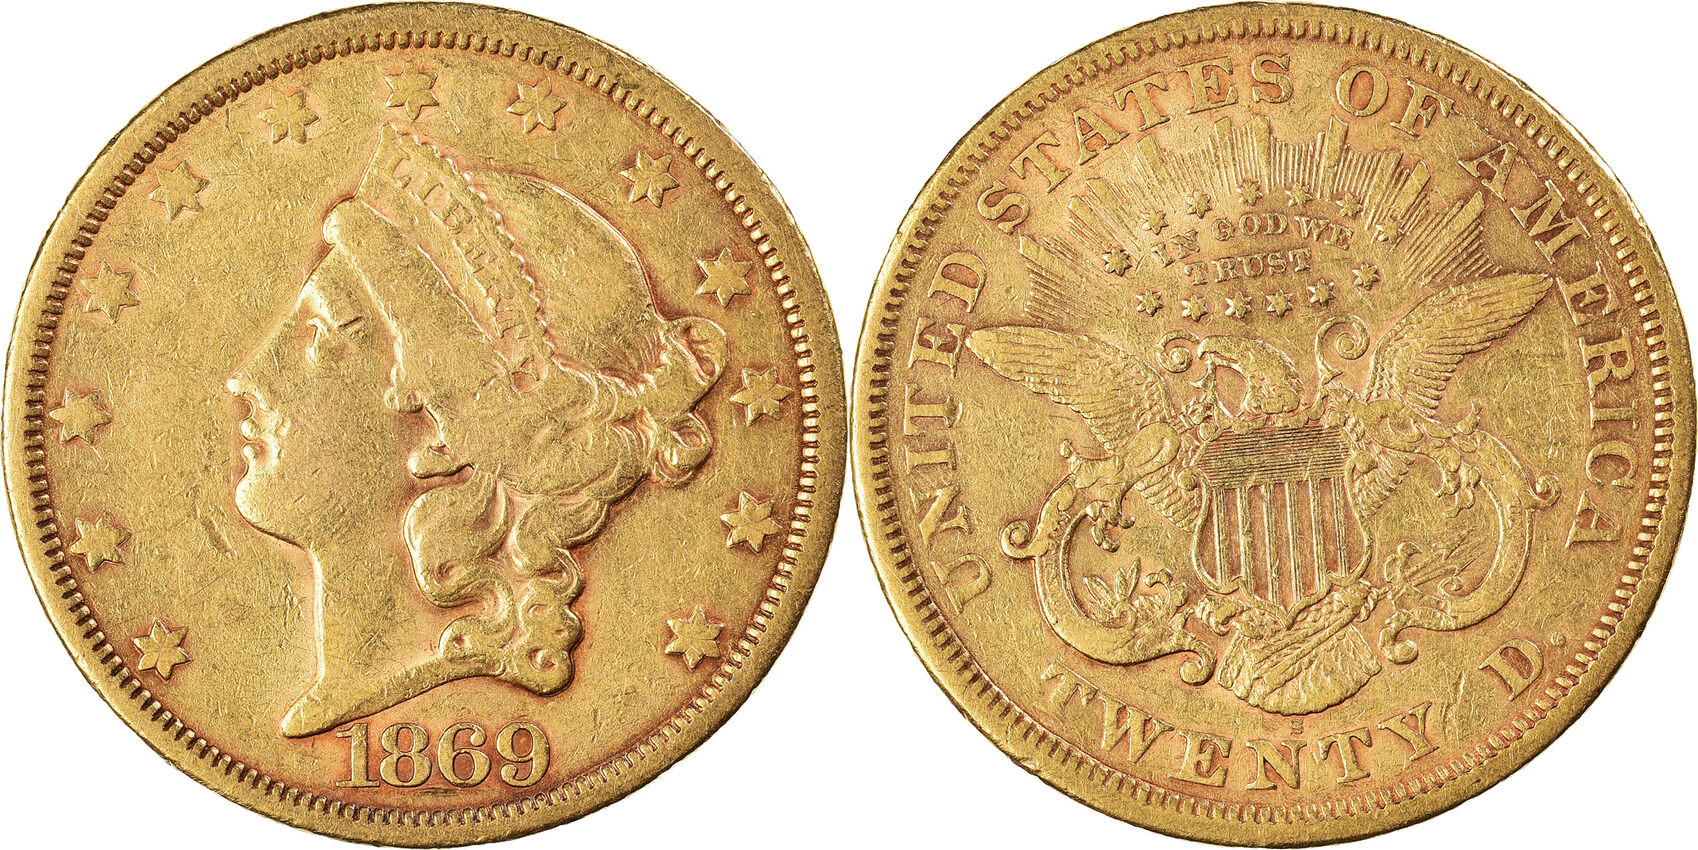 United States $20, Double Eagle 1869 S Coin, Liberty Head, U.S. Mint ...